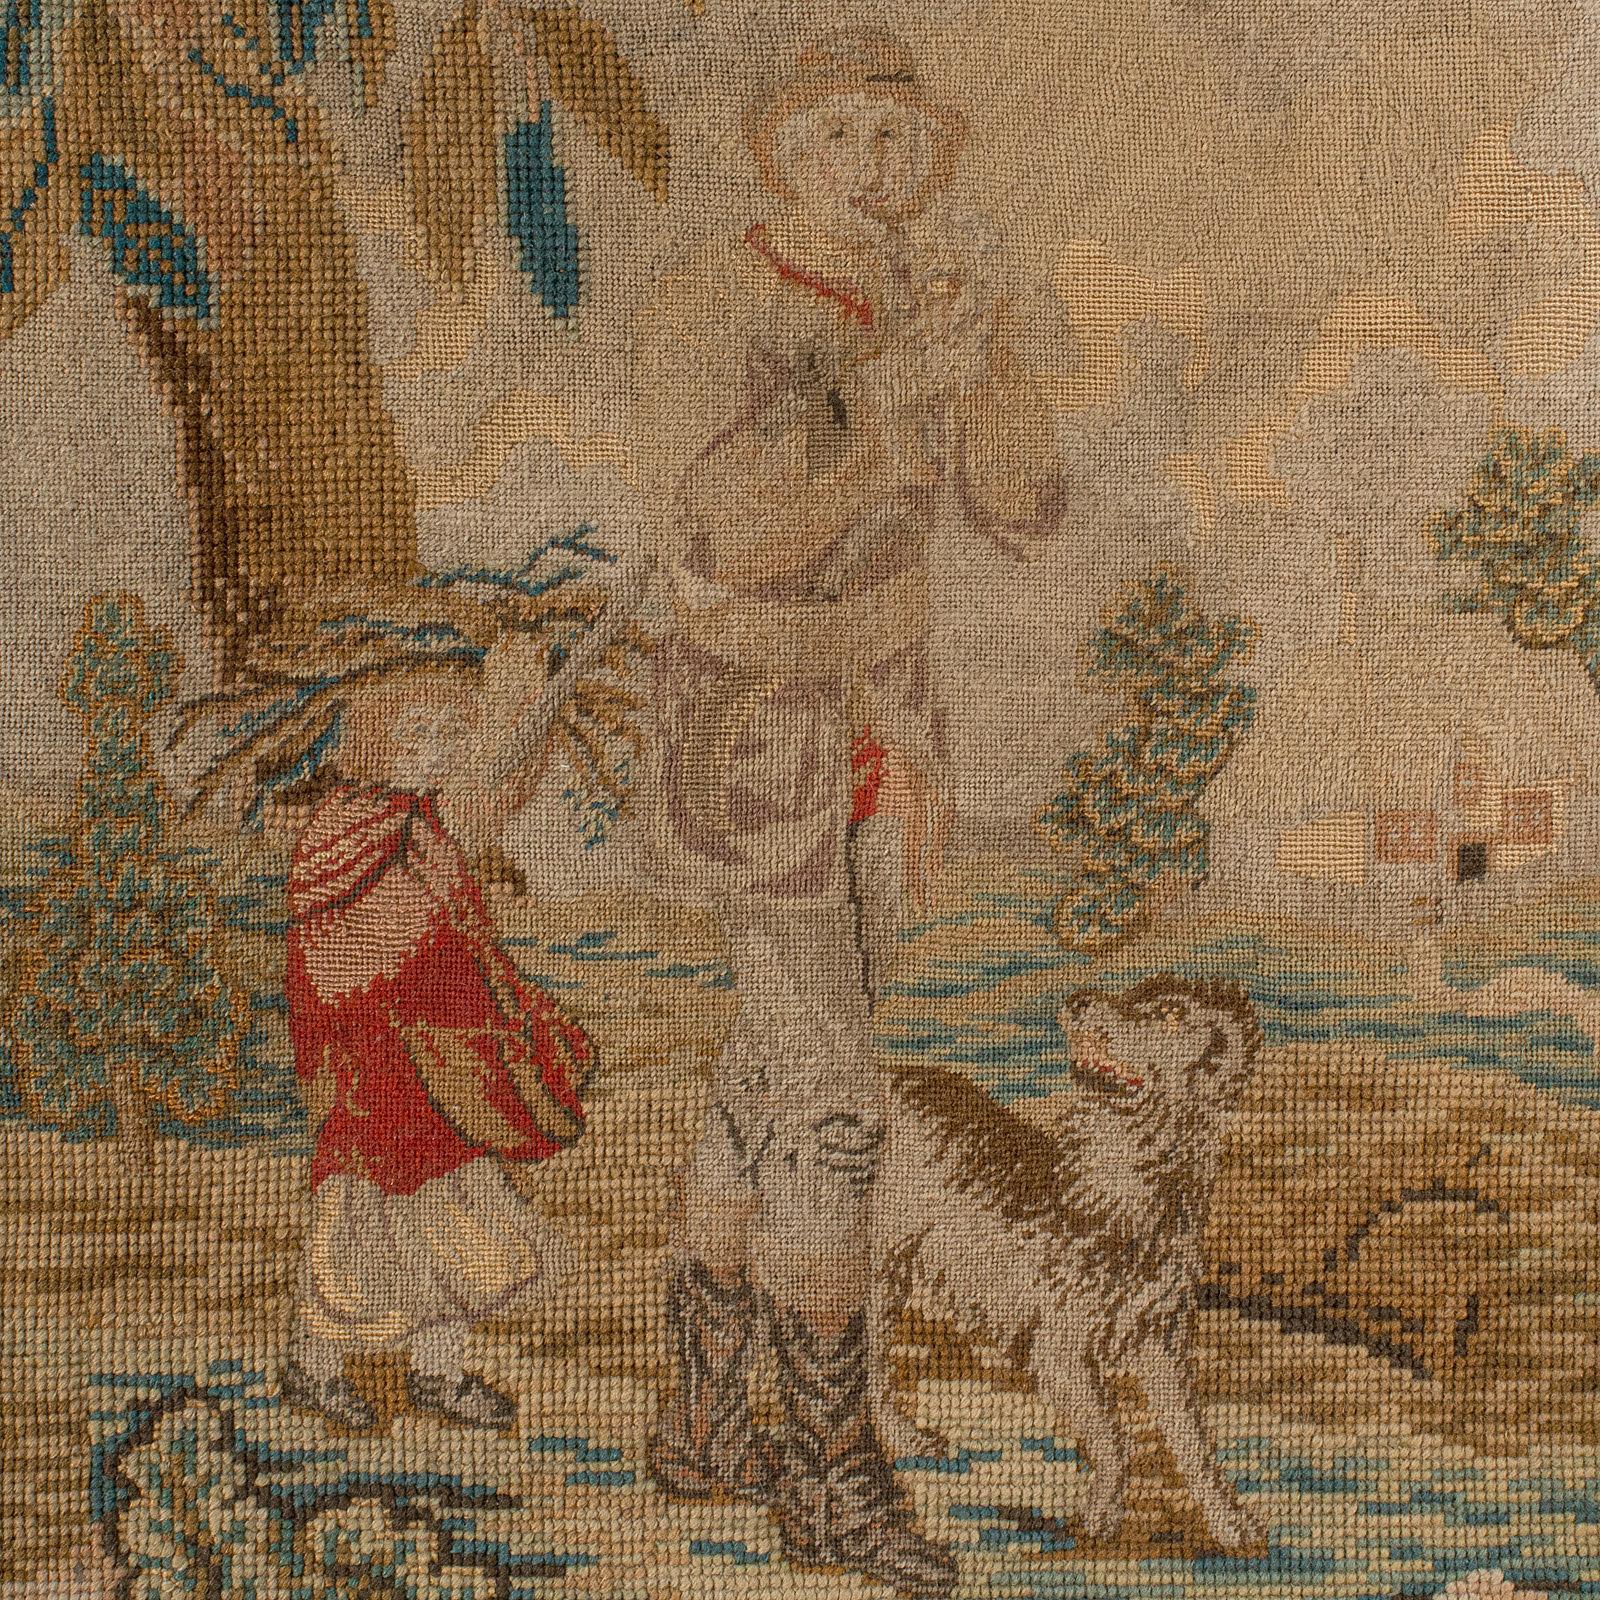 British Antique Tapestry Panel, English, Needlepoint, Burr Walnut, Decorative, C.1800